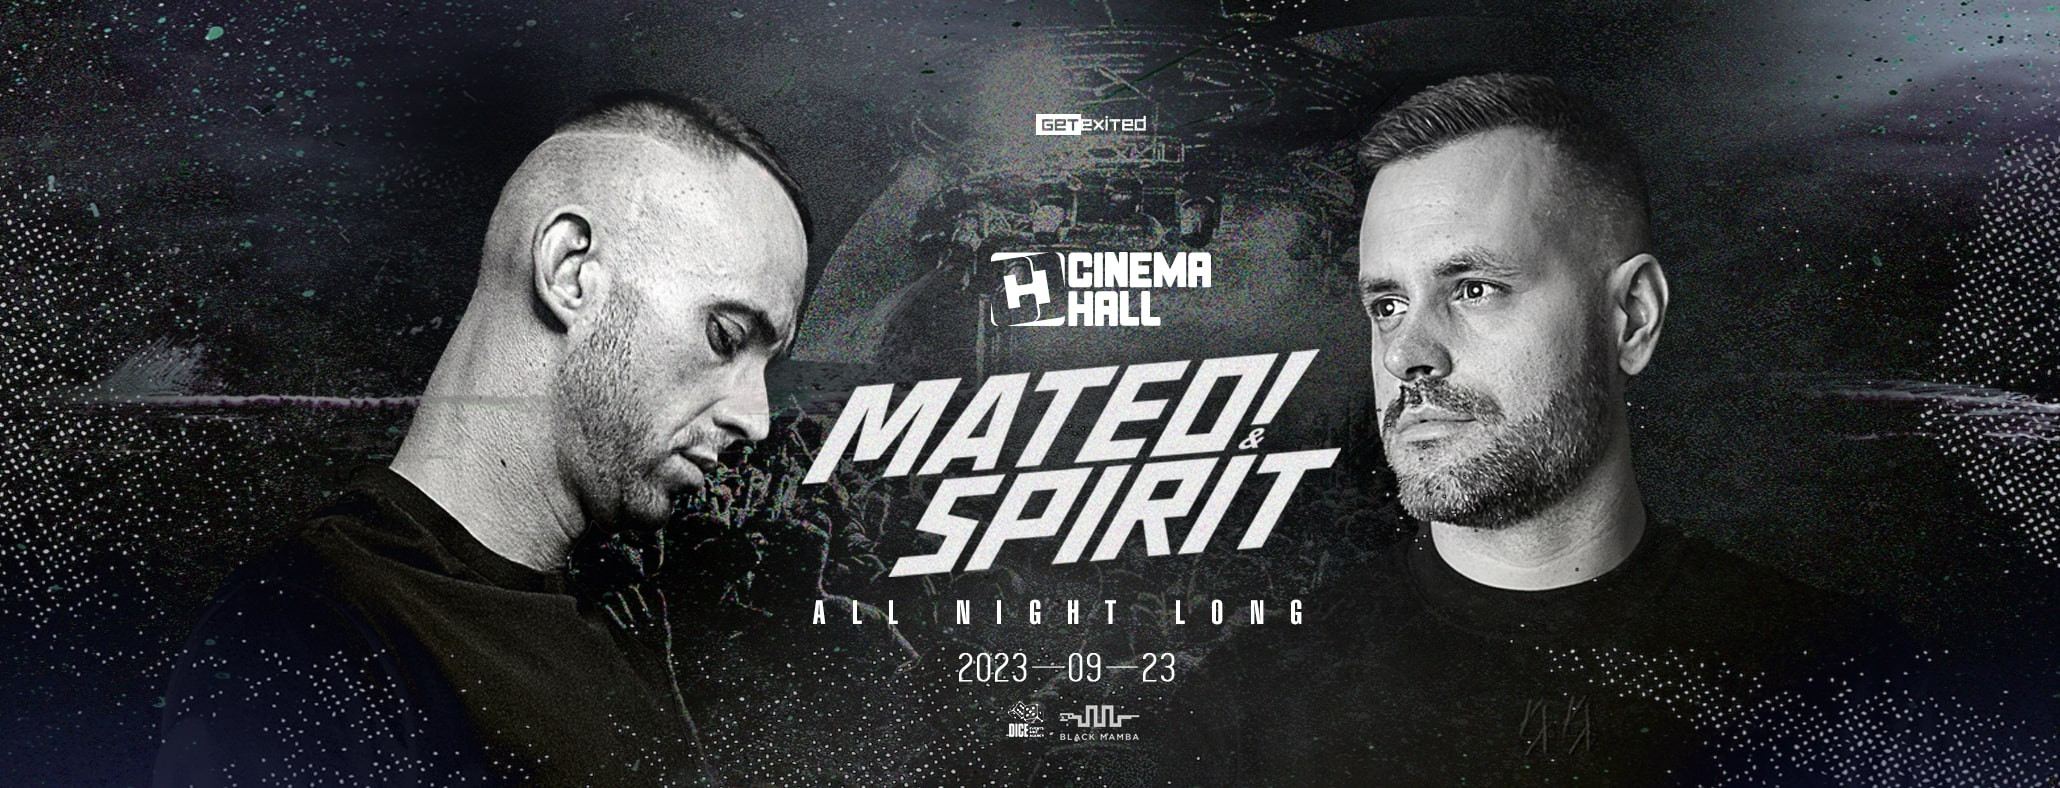 MATEO AND SPIRIT ALL NIGHT LONG